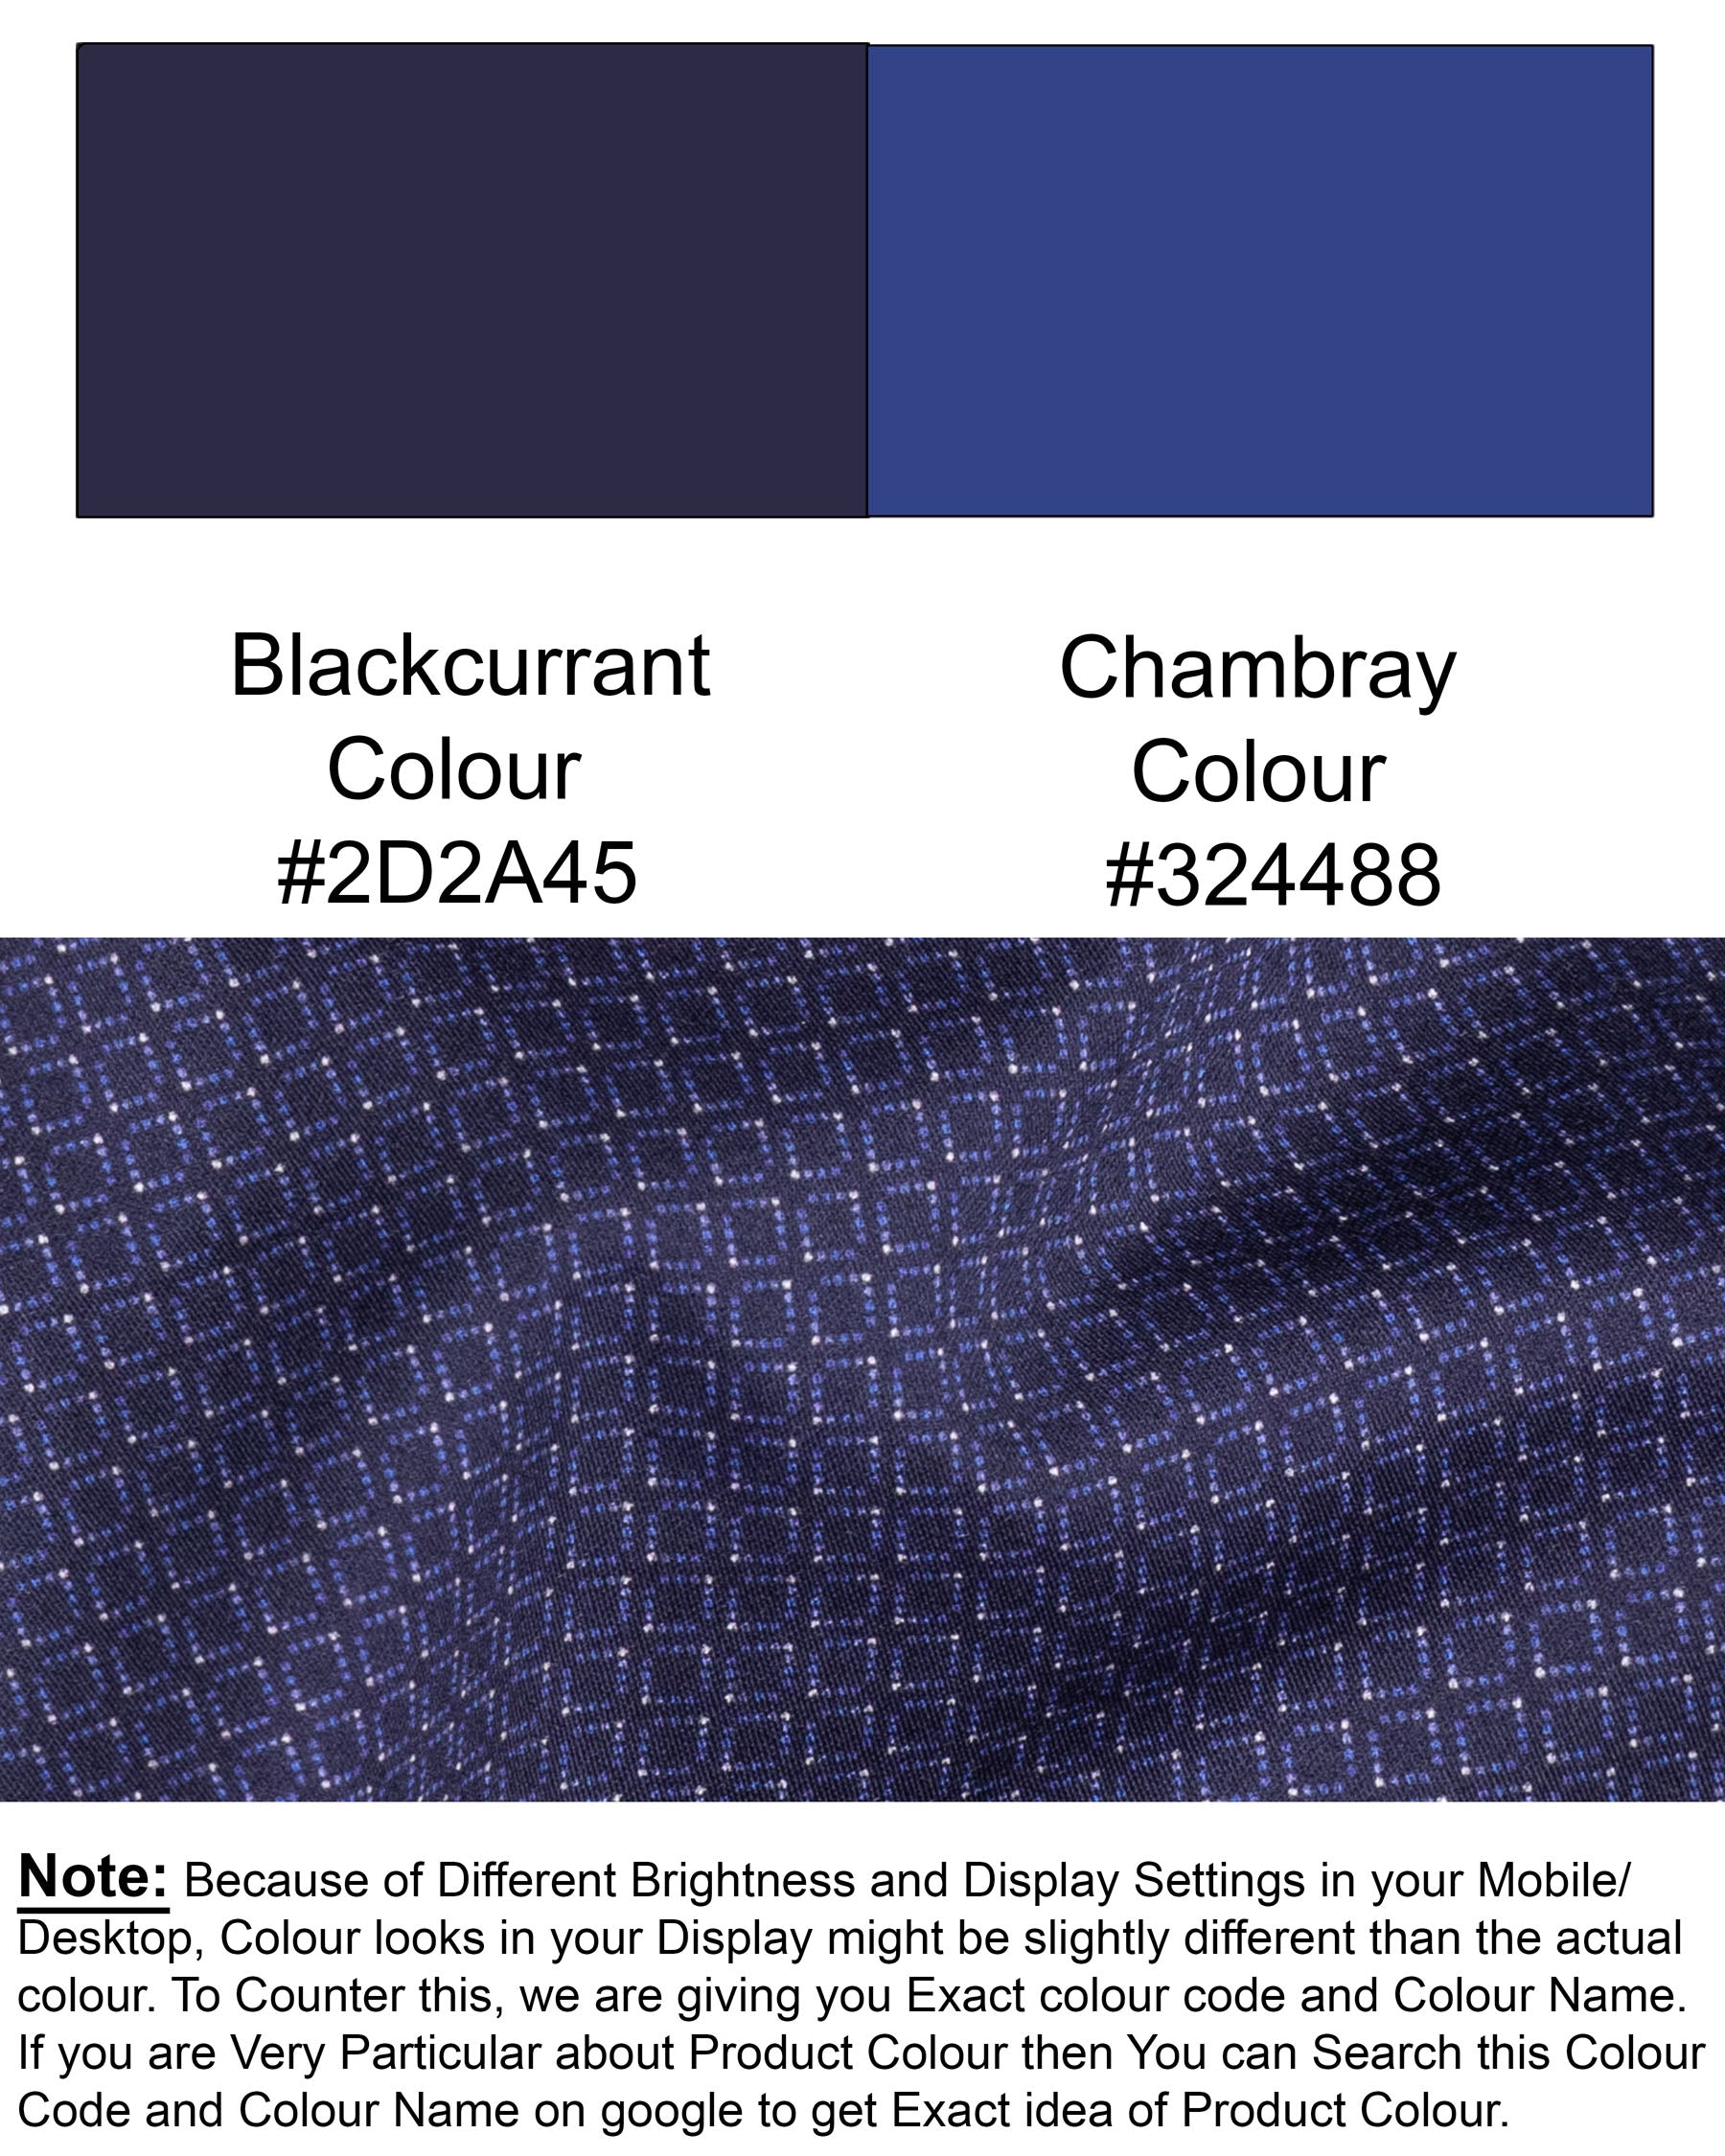 Blackcurrant with Chambray Blue Geometrical Print Super Soft premium Cotton Shirt 6583-BLE-38,6583-BLE-38,6583-BLE-39,6583-BLE-39,6583-BLE-40,6583-BLE-40,6583-BLE-42,6583-BLE-42,6583-BLE-44,6583-BLE-44,6583-BLE-46,6583-BLE-46,6583-BLE-48,6583-BLE-48,6583-BLE-50,6583-BLE-50,6583-BLE-52,6583-BLE-52